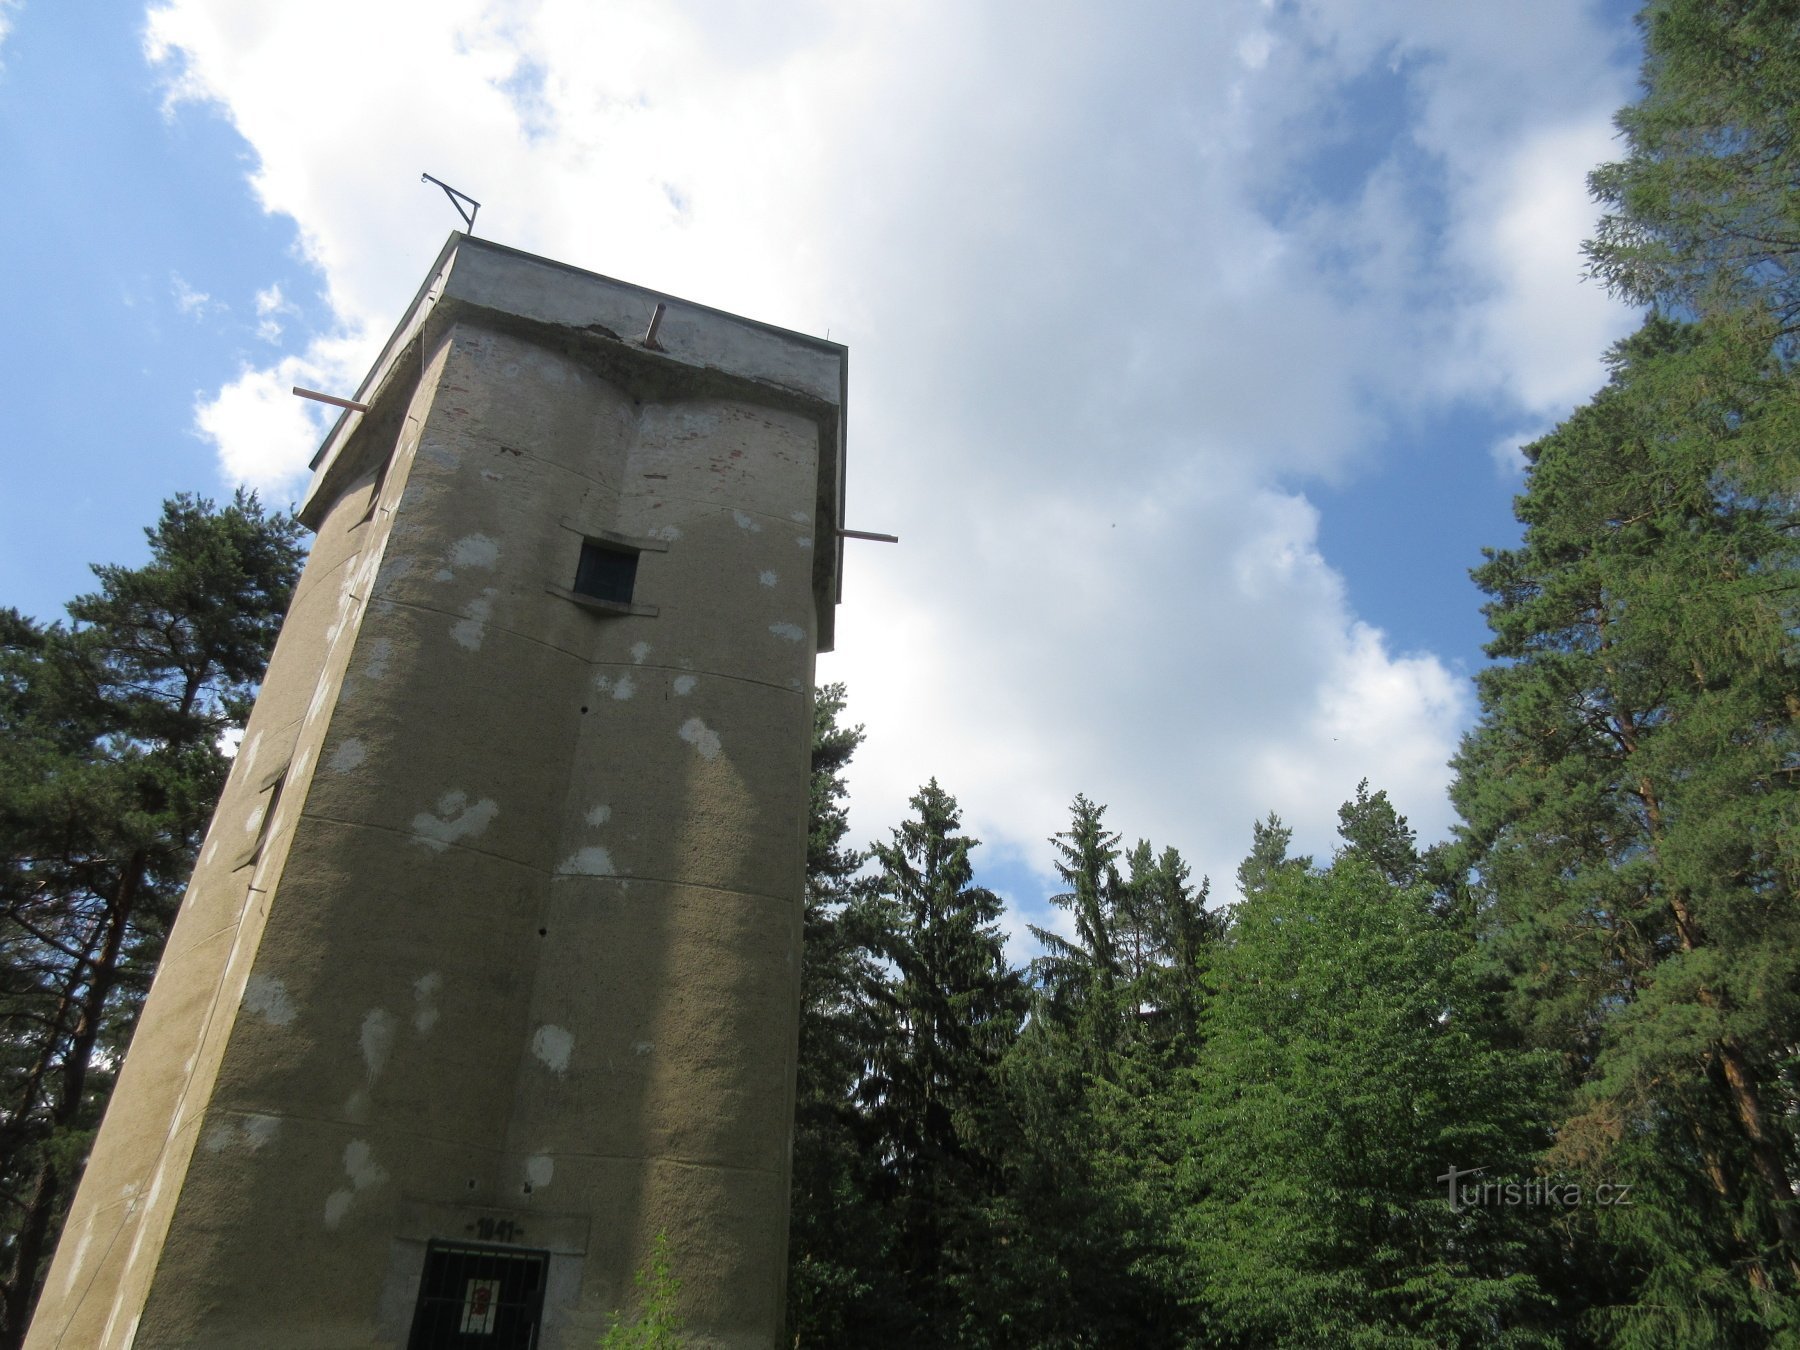 Földmérő torony – Koňský vrch kilátó